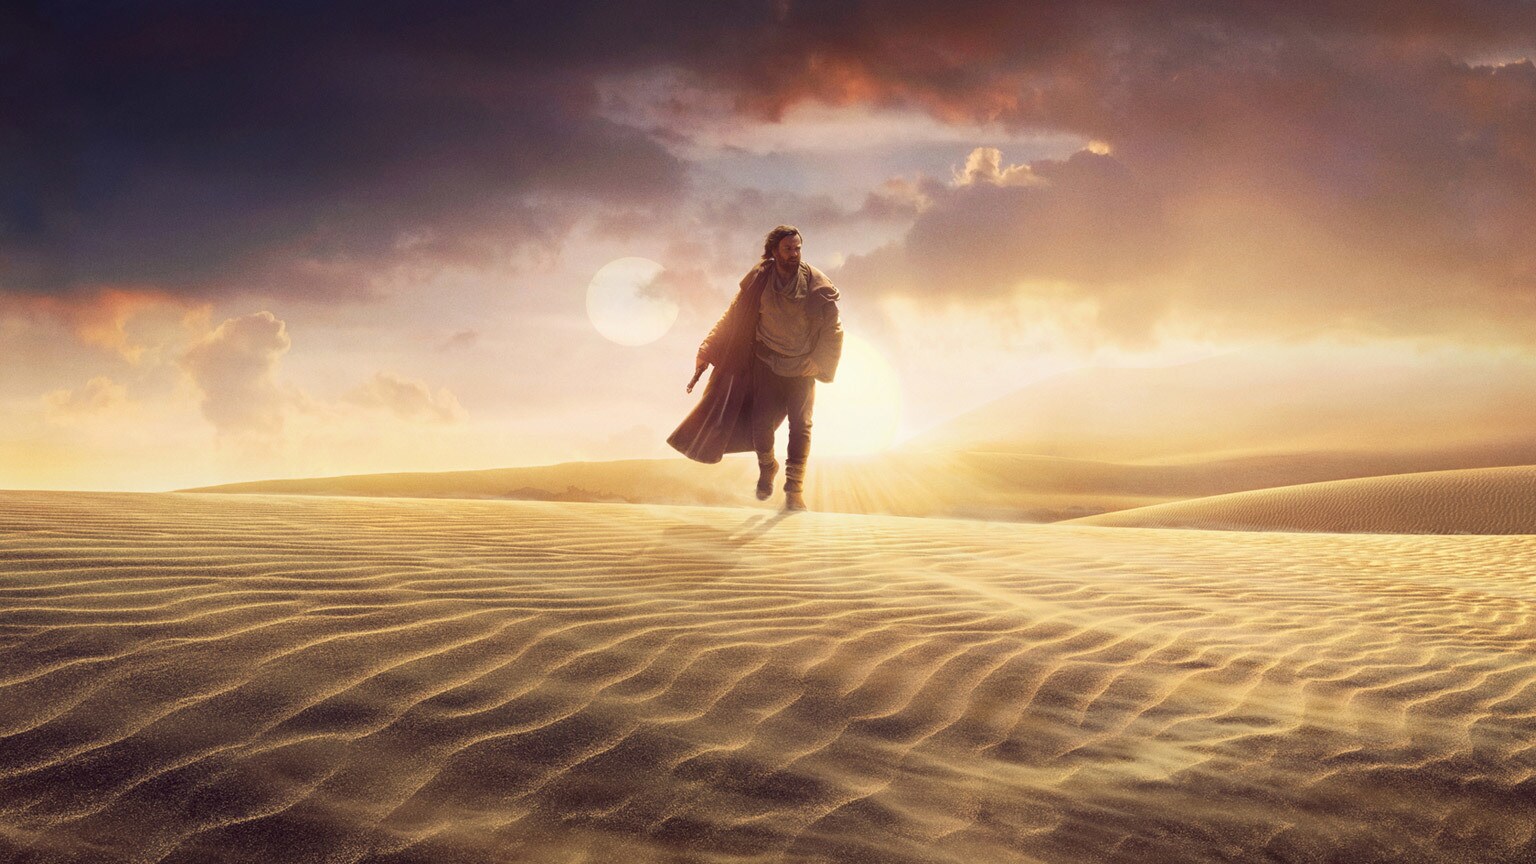 Obi-Wan Kenobi walks in the desert, in an image from the teaser poster of the Disney+ limited series.